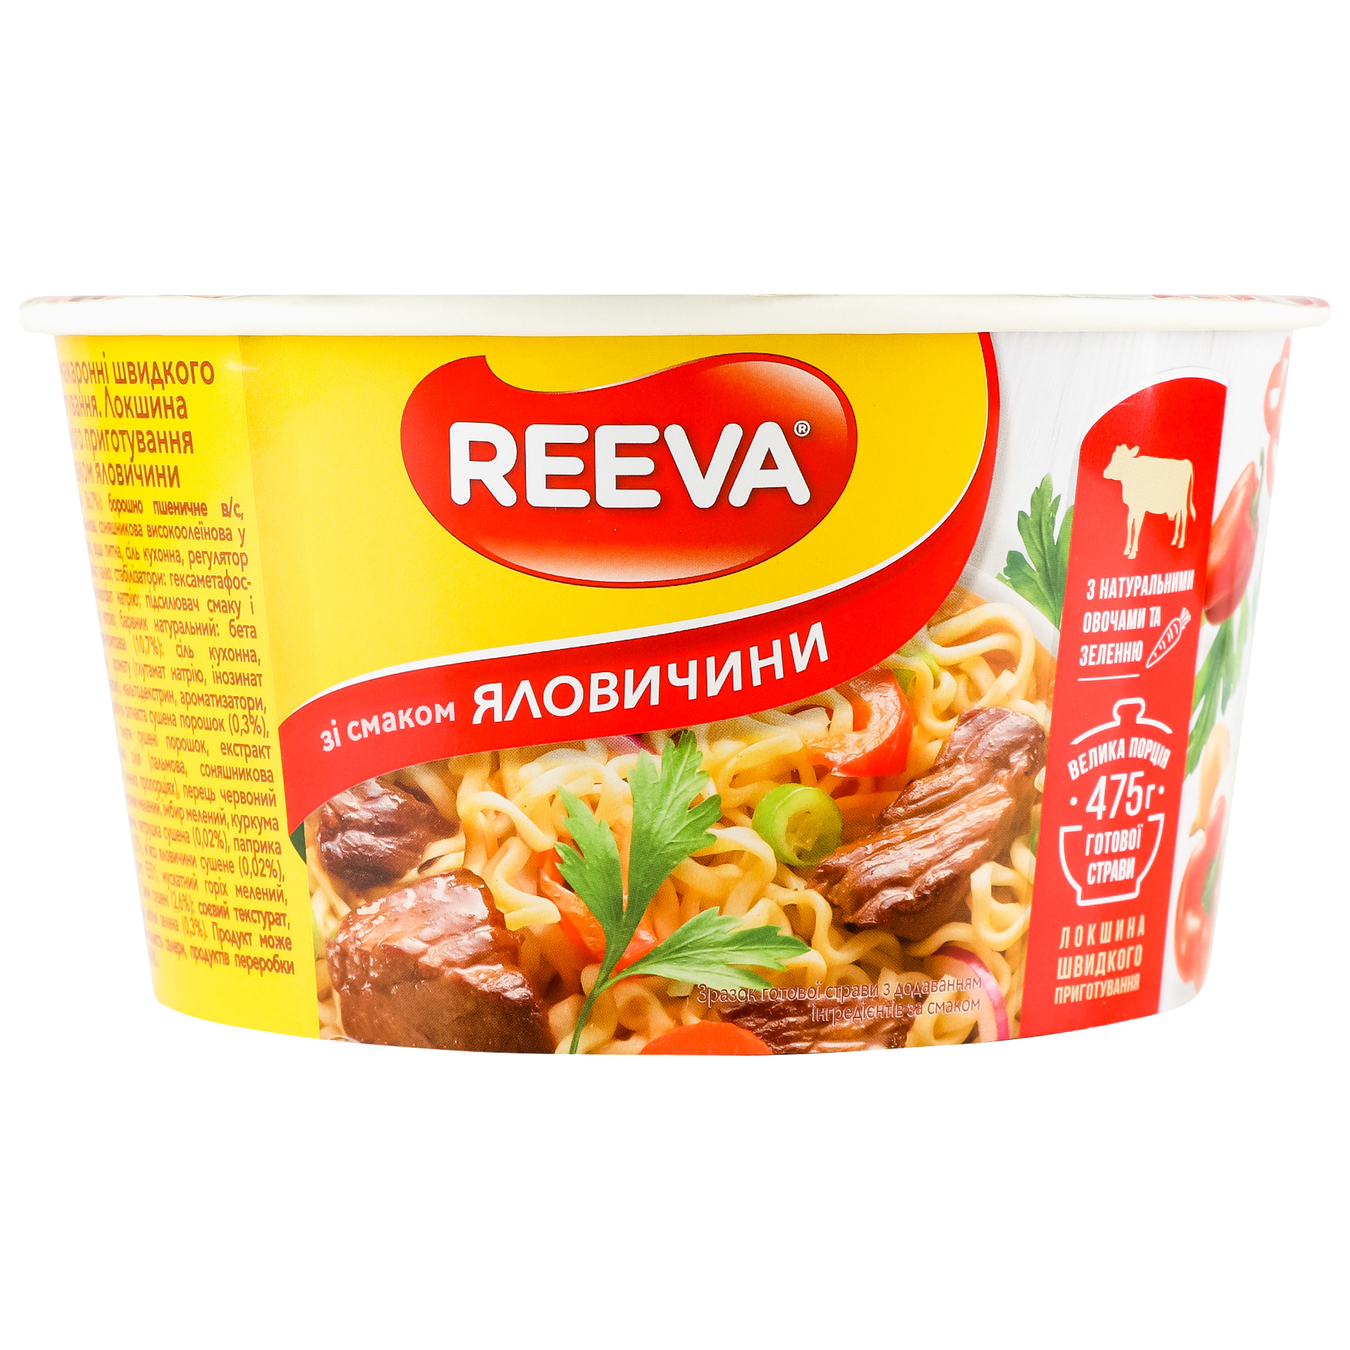 Reeva instant noodles with beef flavor 75g